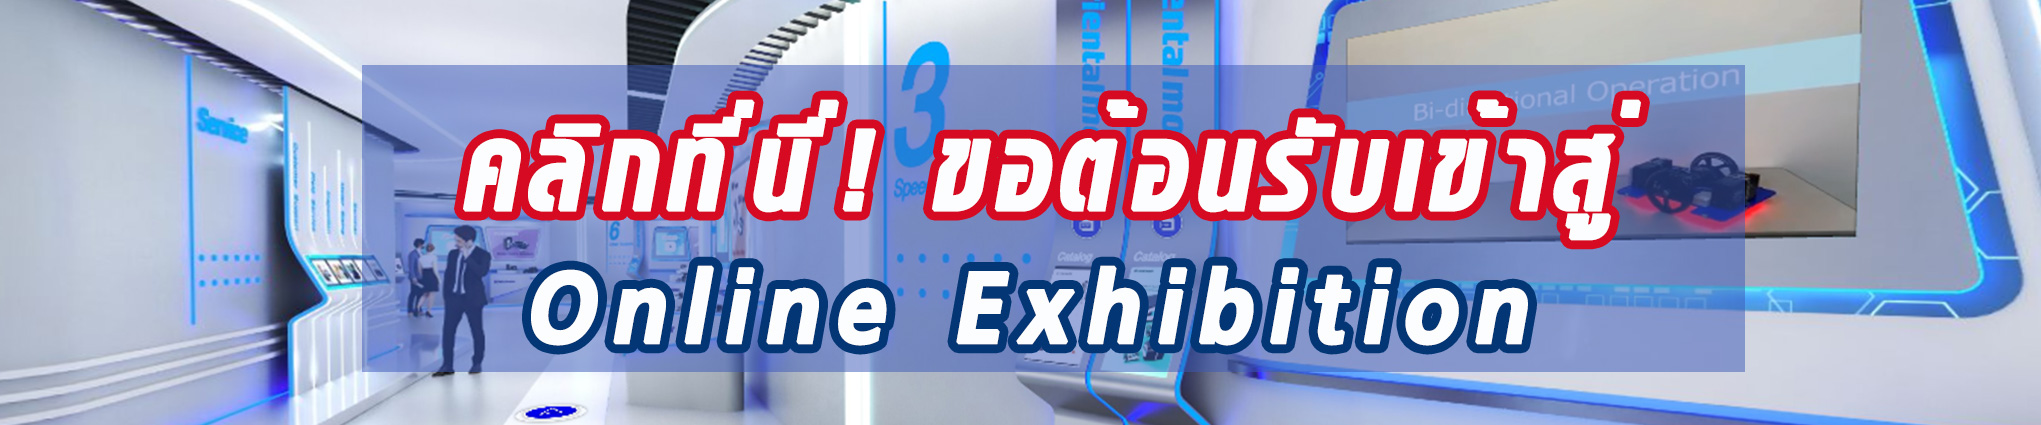 Oriental Motor Online Exhibition